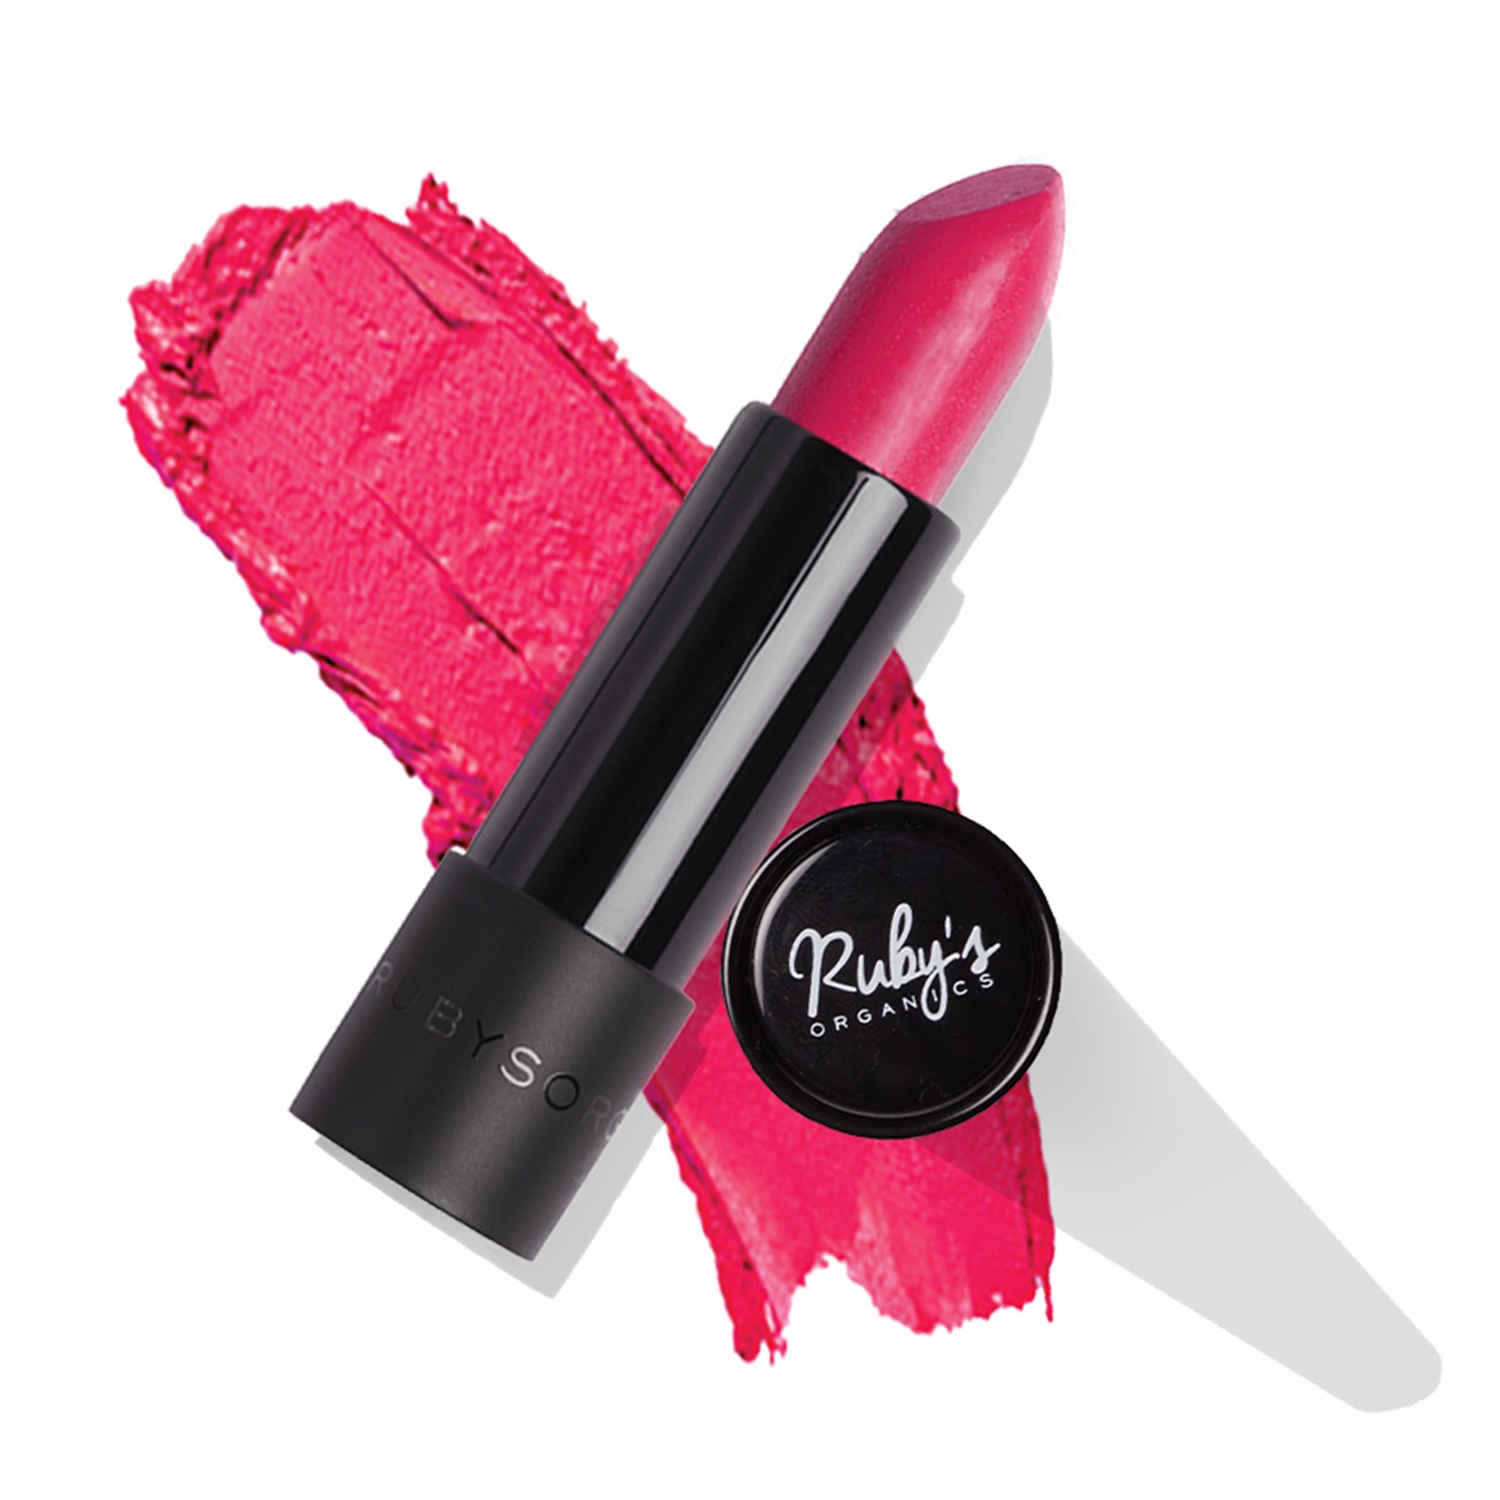 Ruby's Organics | Ruby's Organics Lipstick - Rani (3.7g)